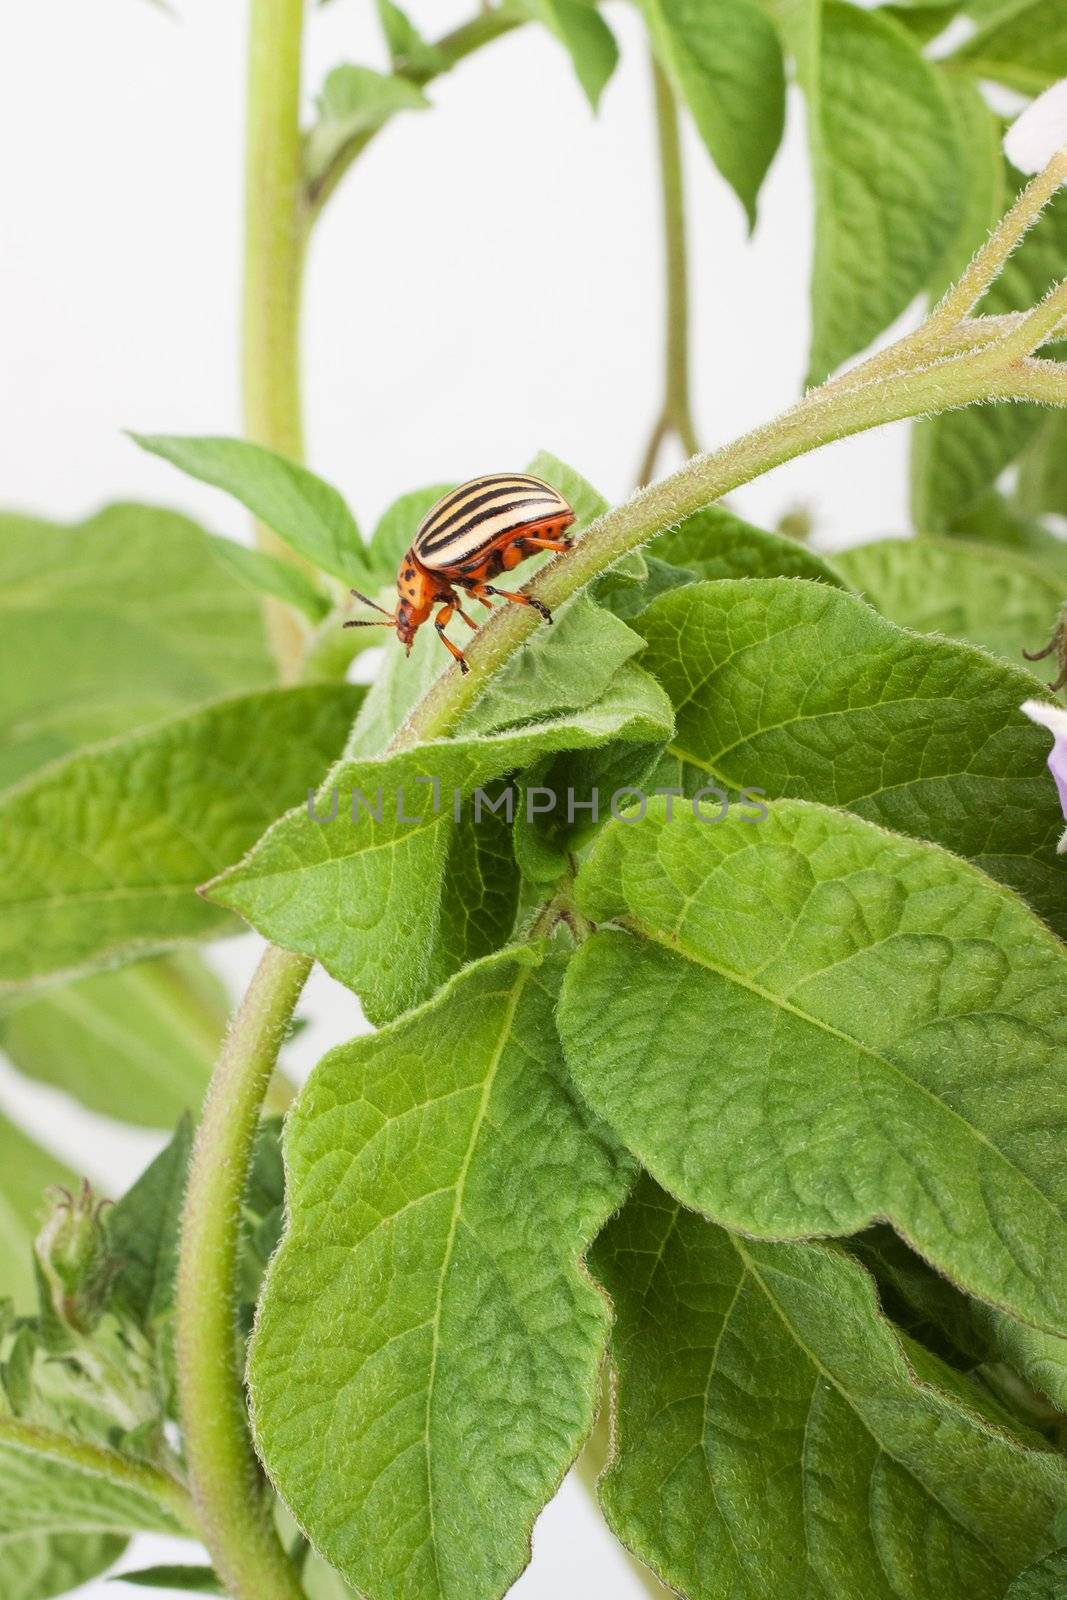 Colorado potato beetle on a green leaves